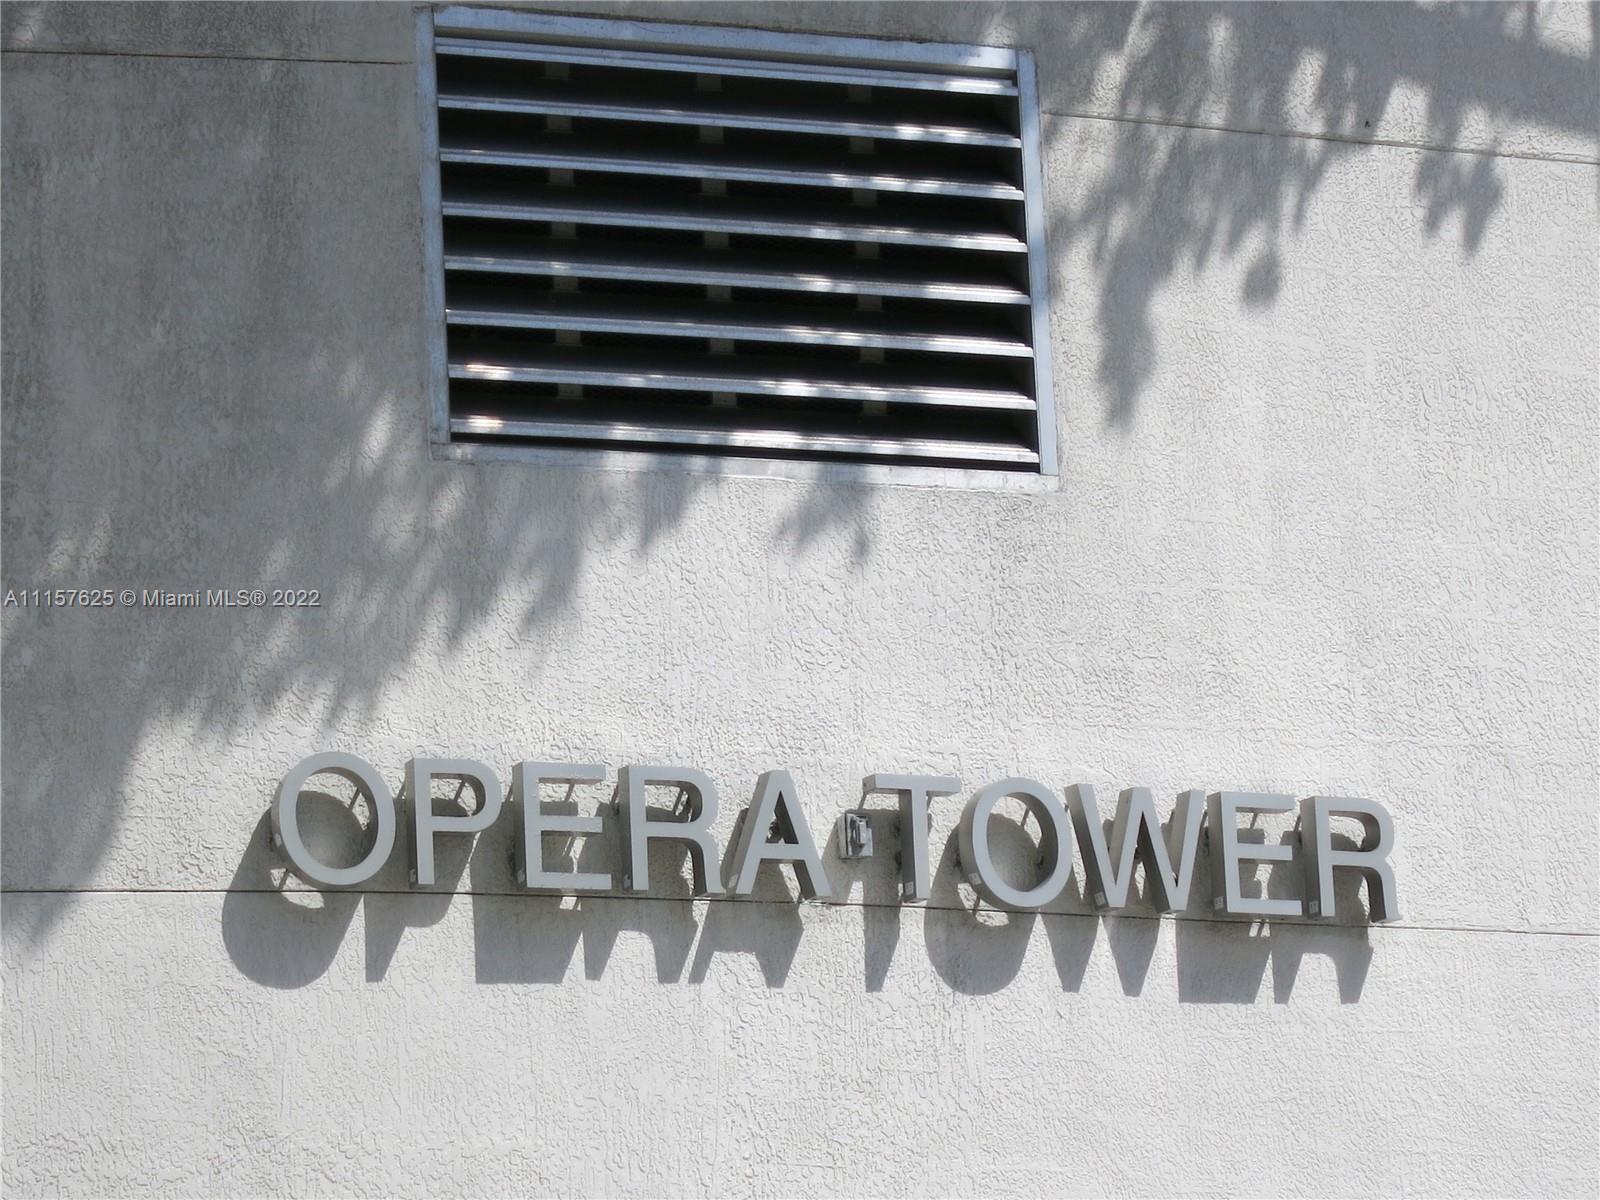 Opera Tower #39